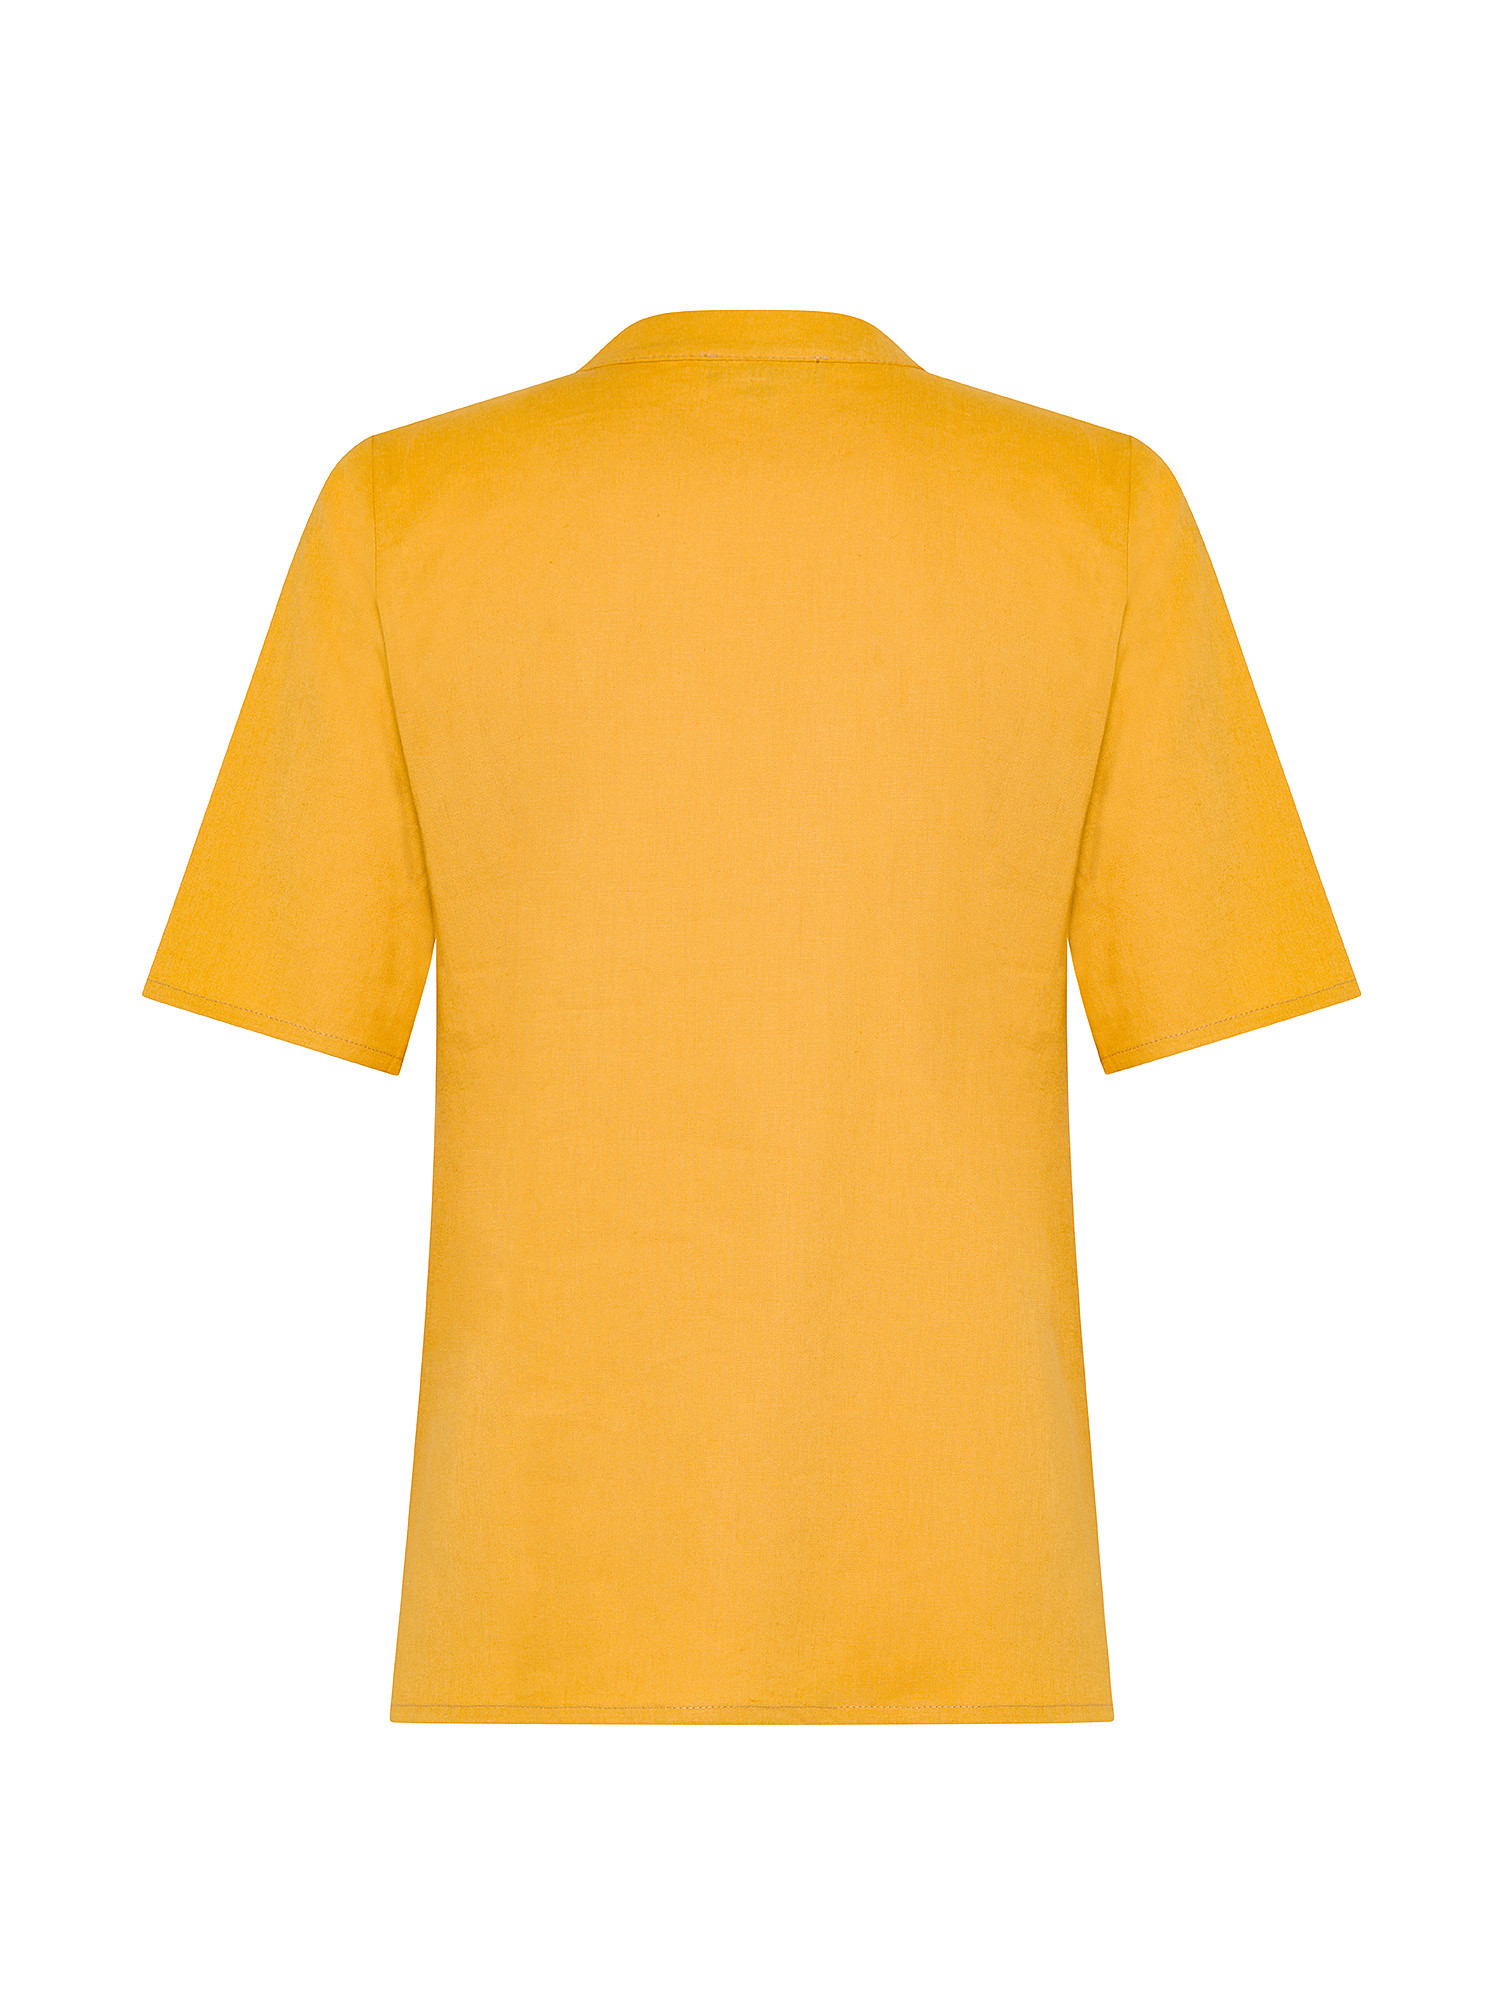 Koan - Linen blend blouse, Mustard Yellow, large image number 1